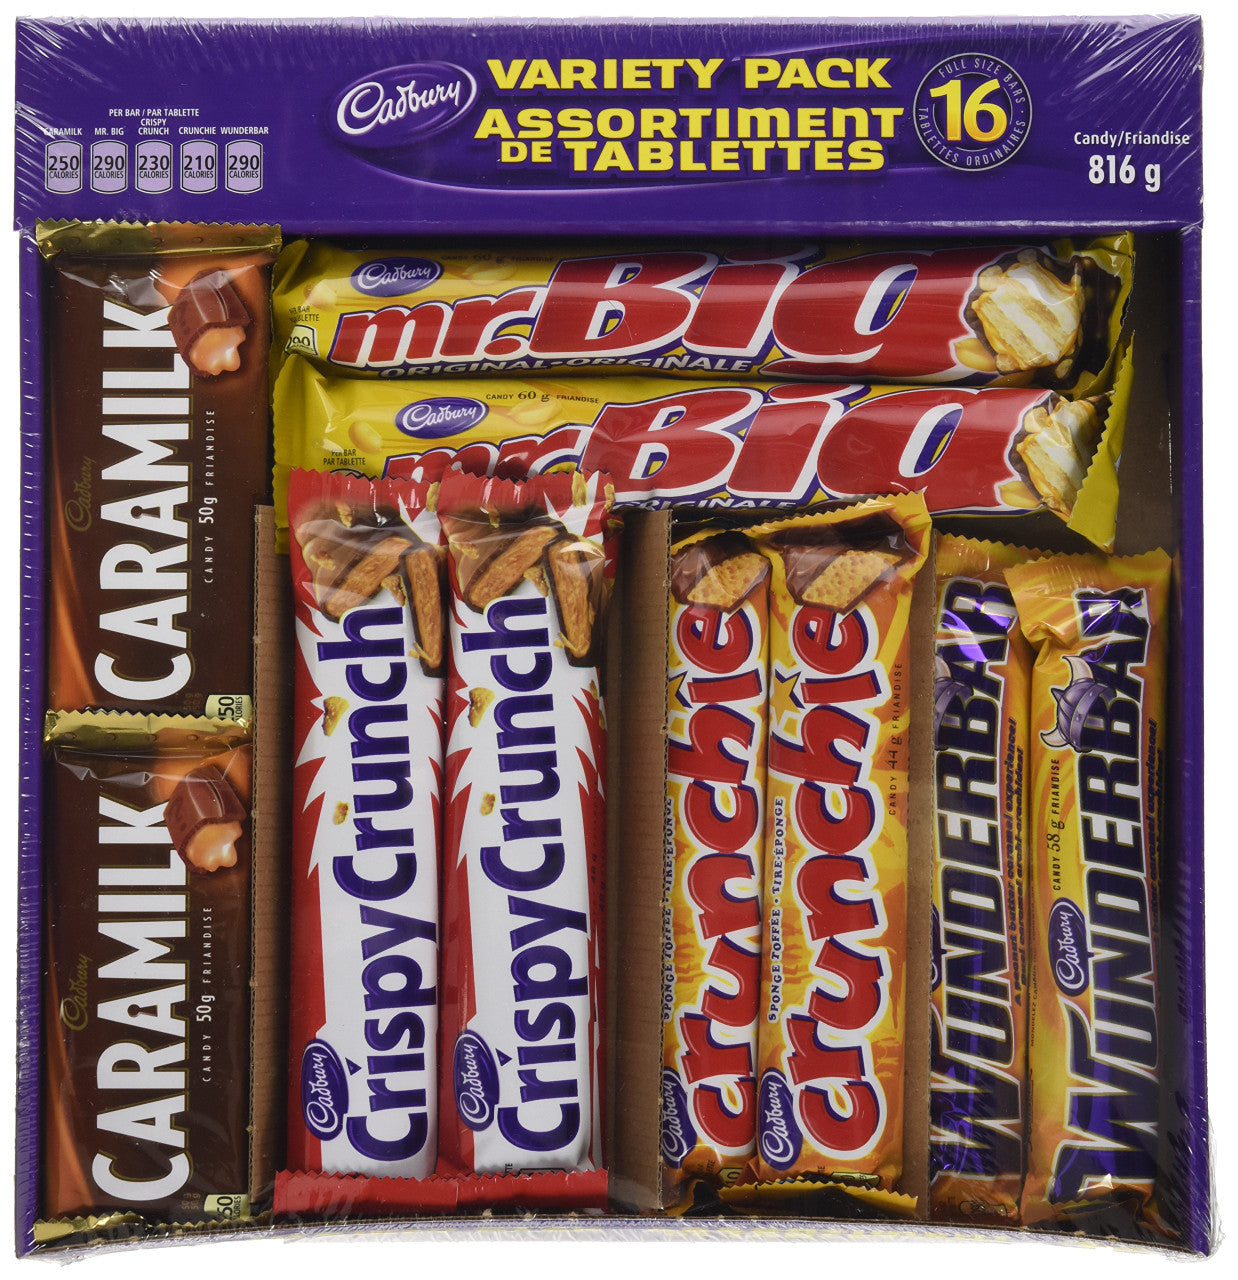 Cadbury 16 Full size Chocolate Bars Variety Pack - Wunderbar, Caramilk, Mr.Big, Crunchie, Crispy Crunch 816 g